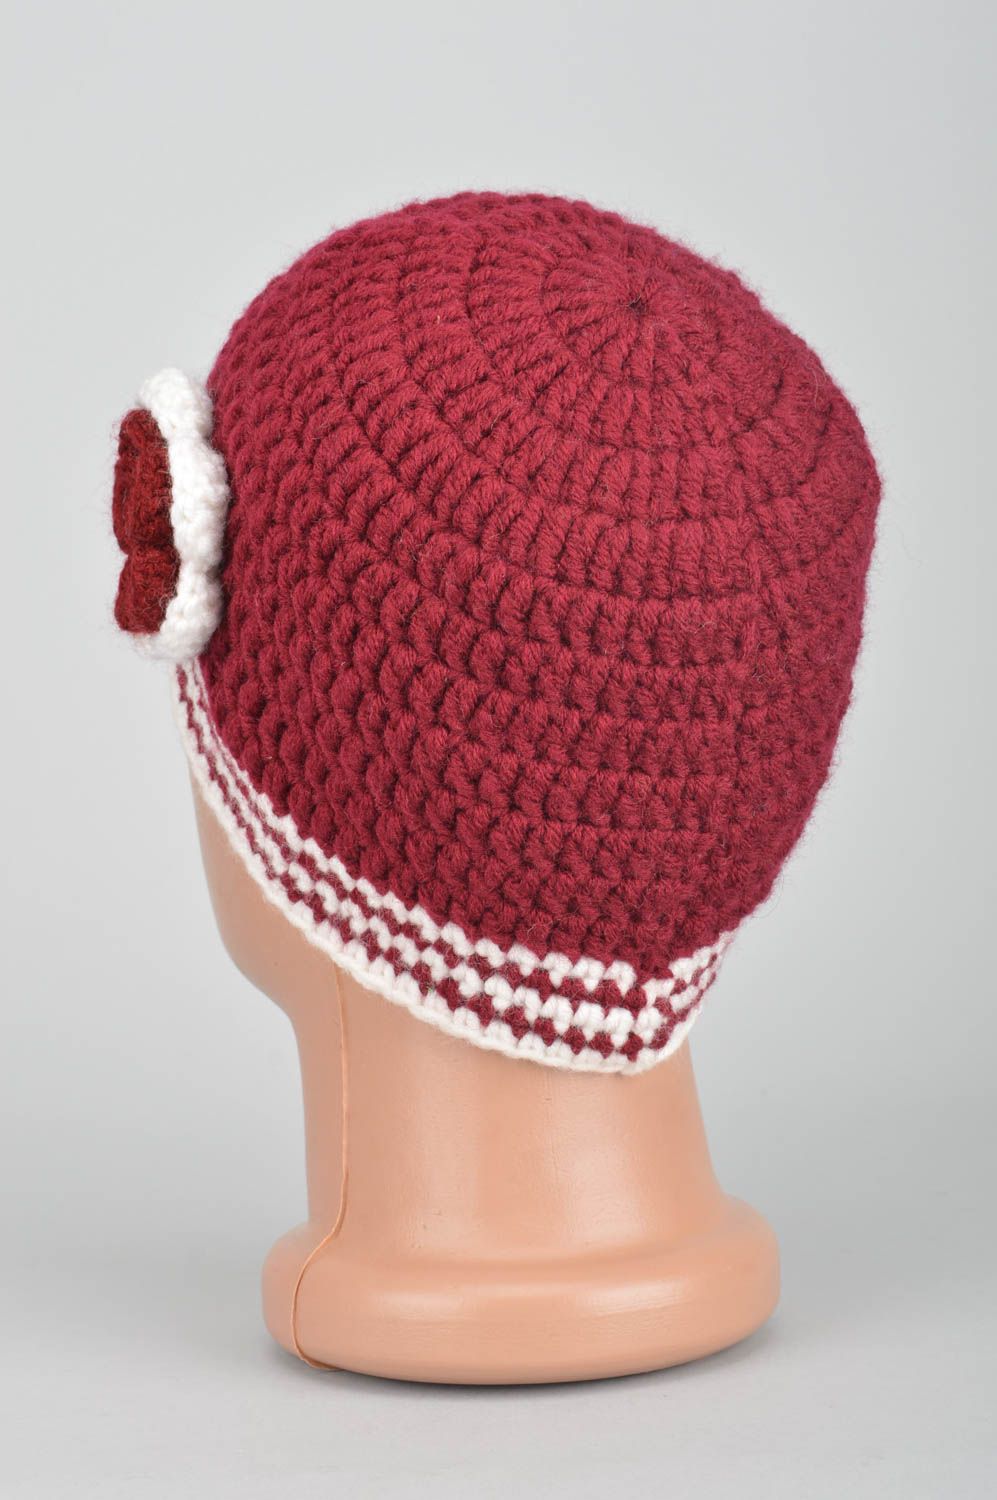 Knitted winter cap warm cap with flower children headwear accessories for kids photo 5